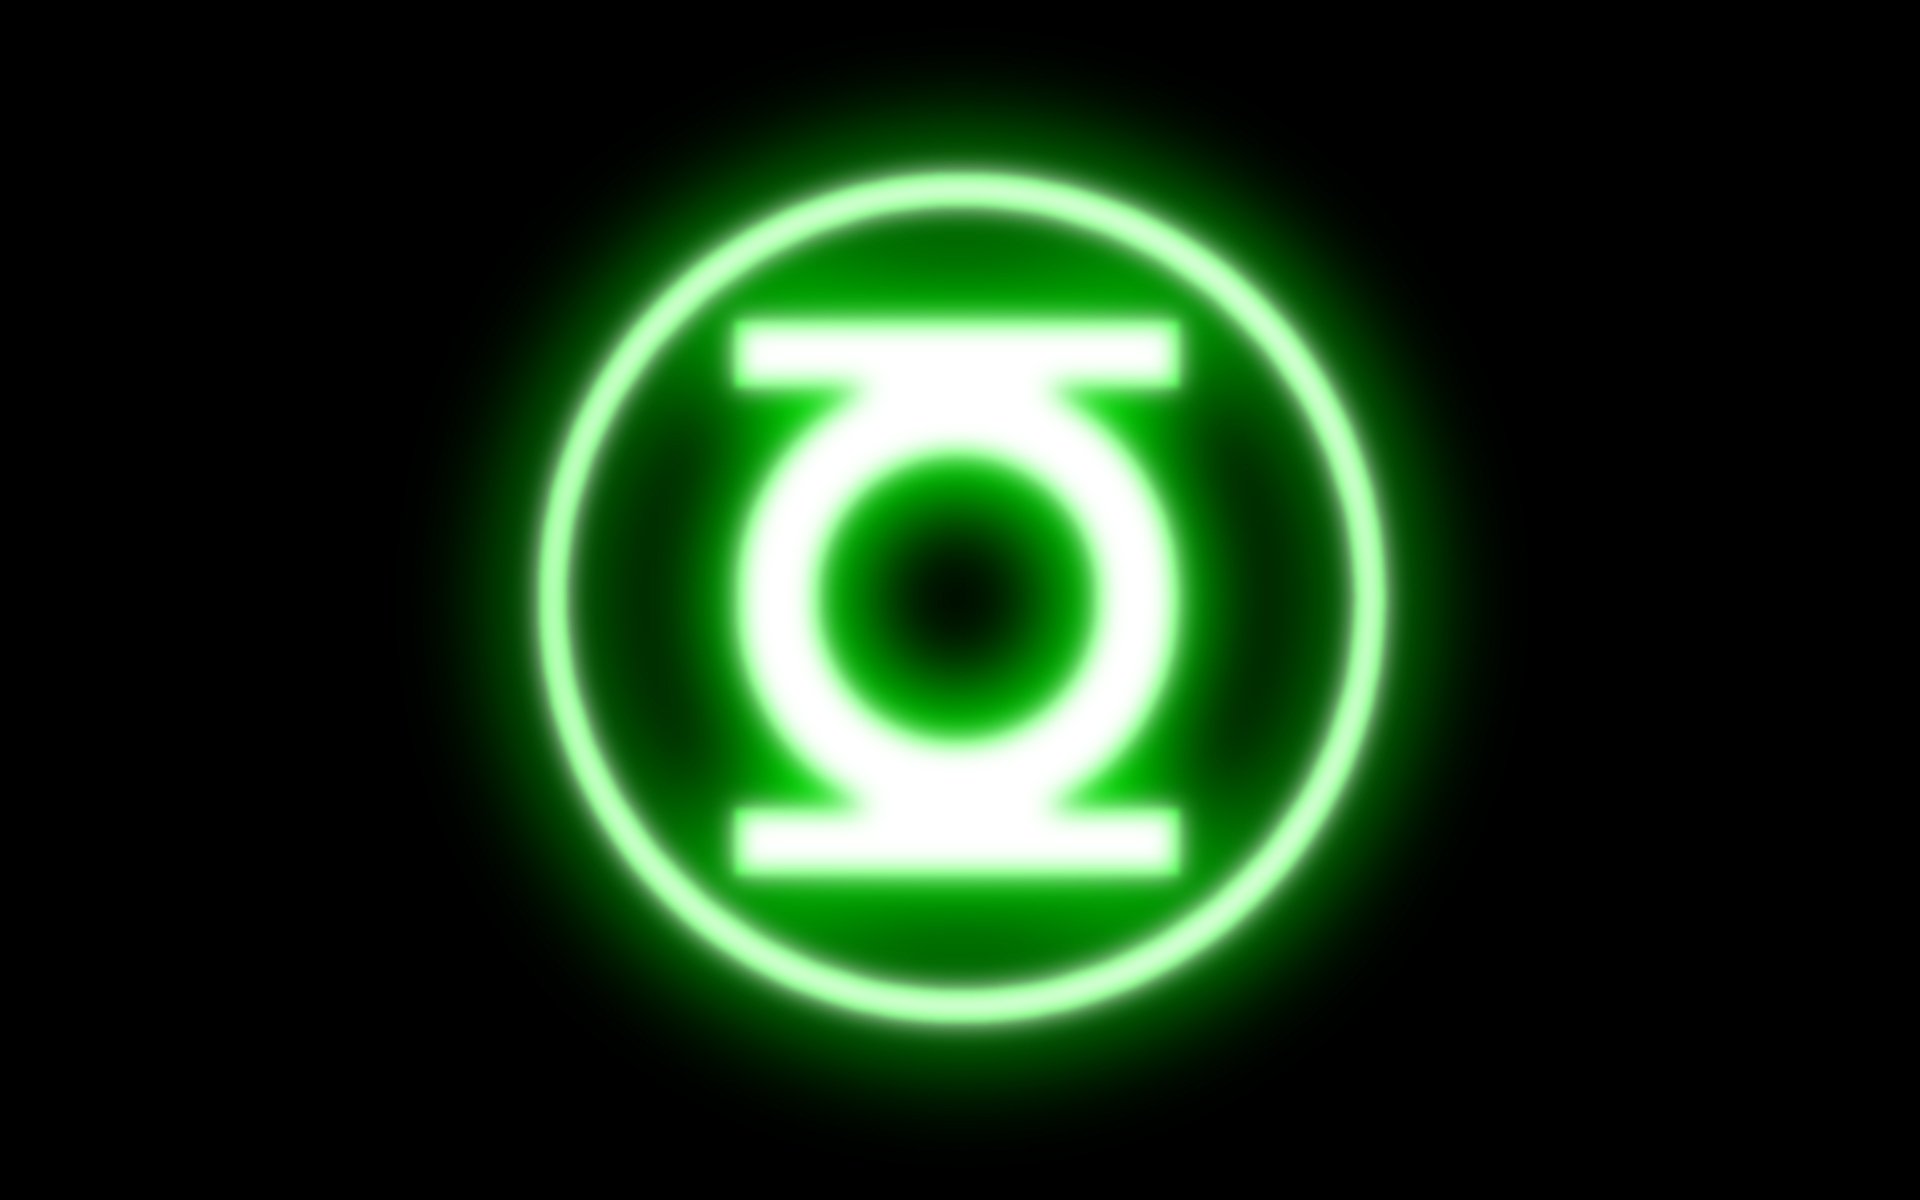 Stary Green Lantern Logo background by KalEl7 on DeviantArt